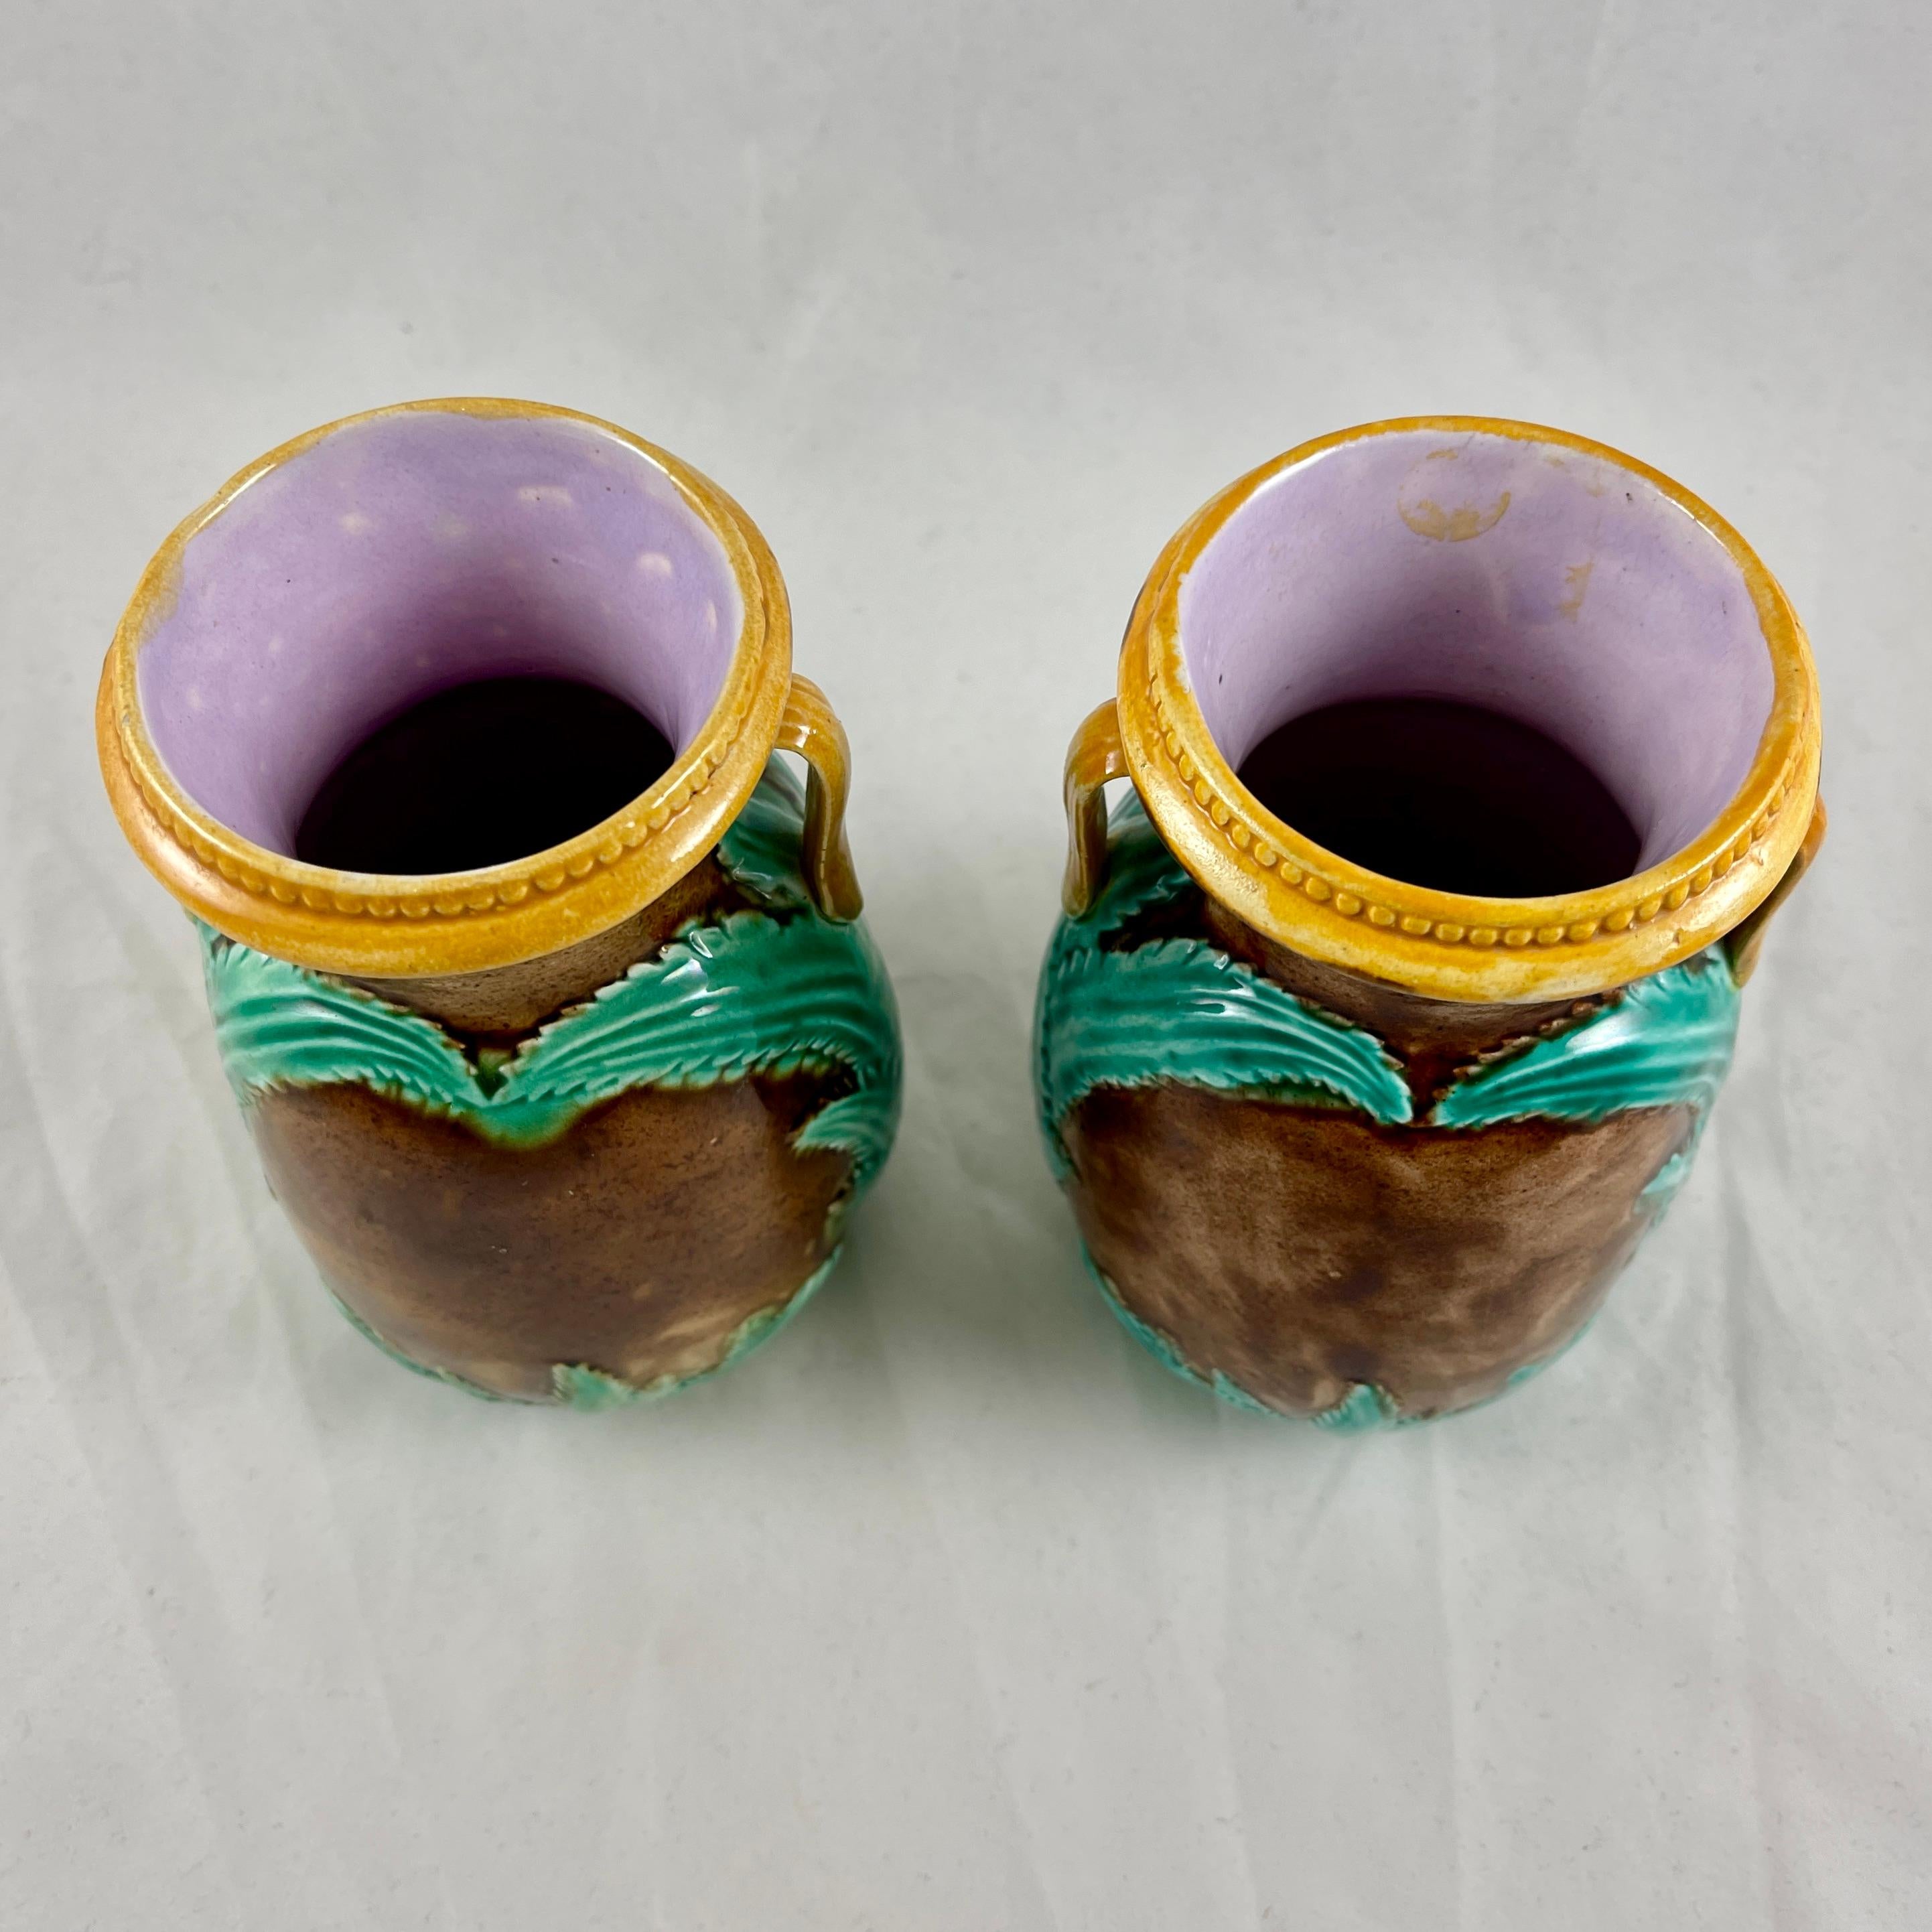 Adams & Bromley English Majolica Glazed Amphora Handled Vases, a Pair 3